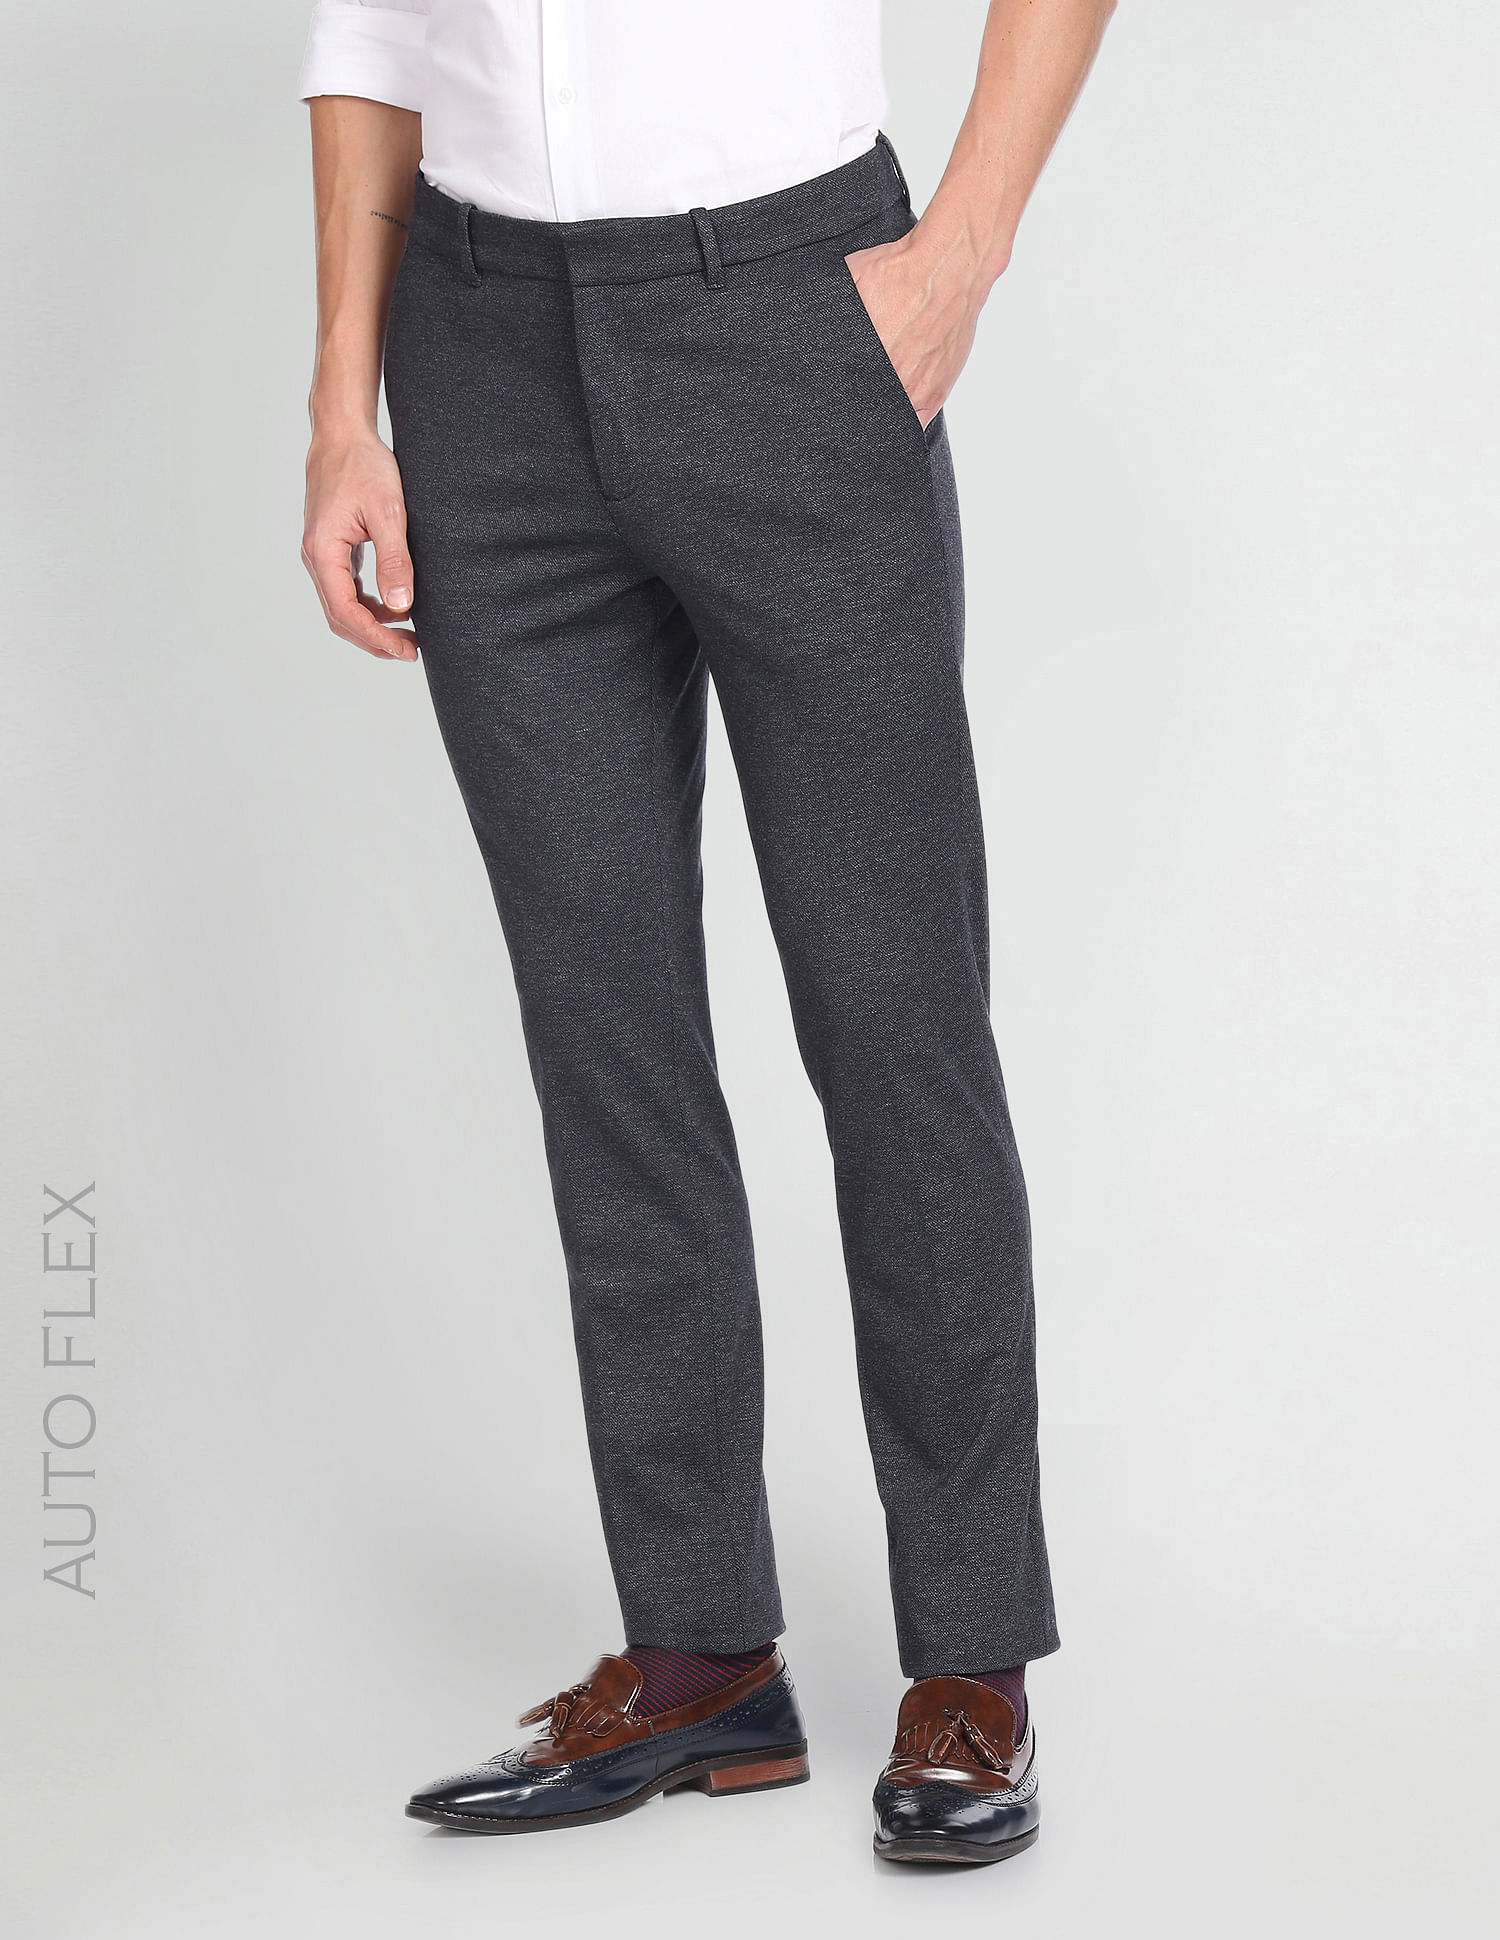 ARROW Solid Autoflex Formal Trousers